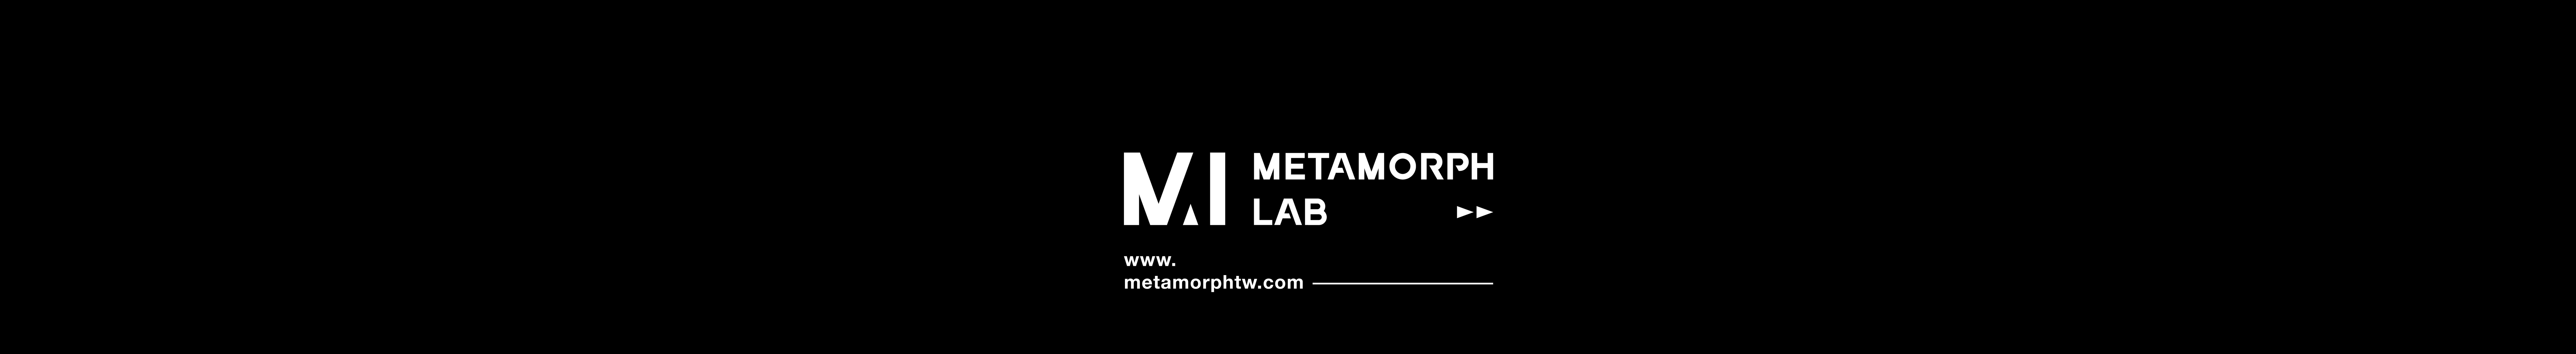 Баннер профиля METAMORPH LAB